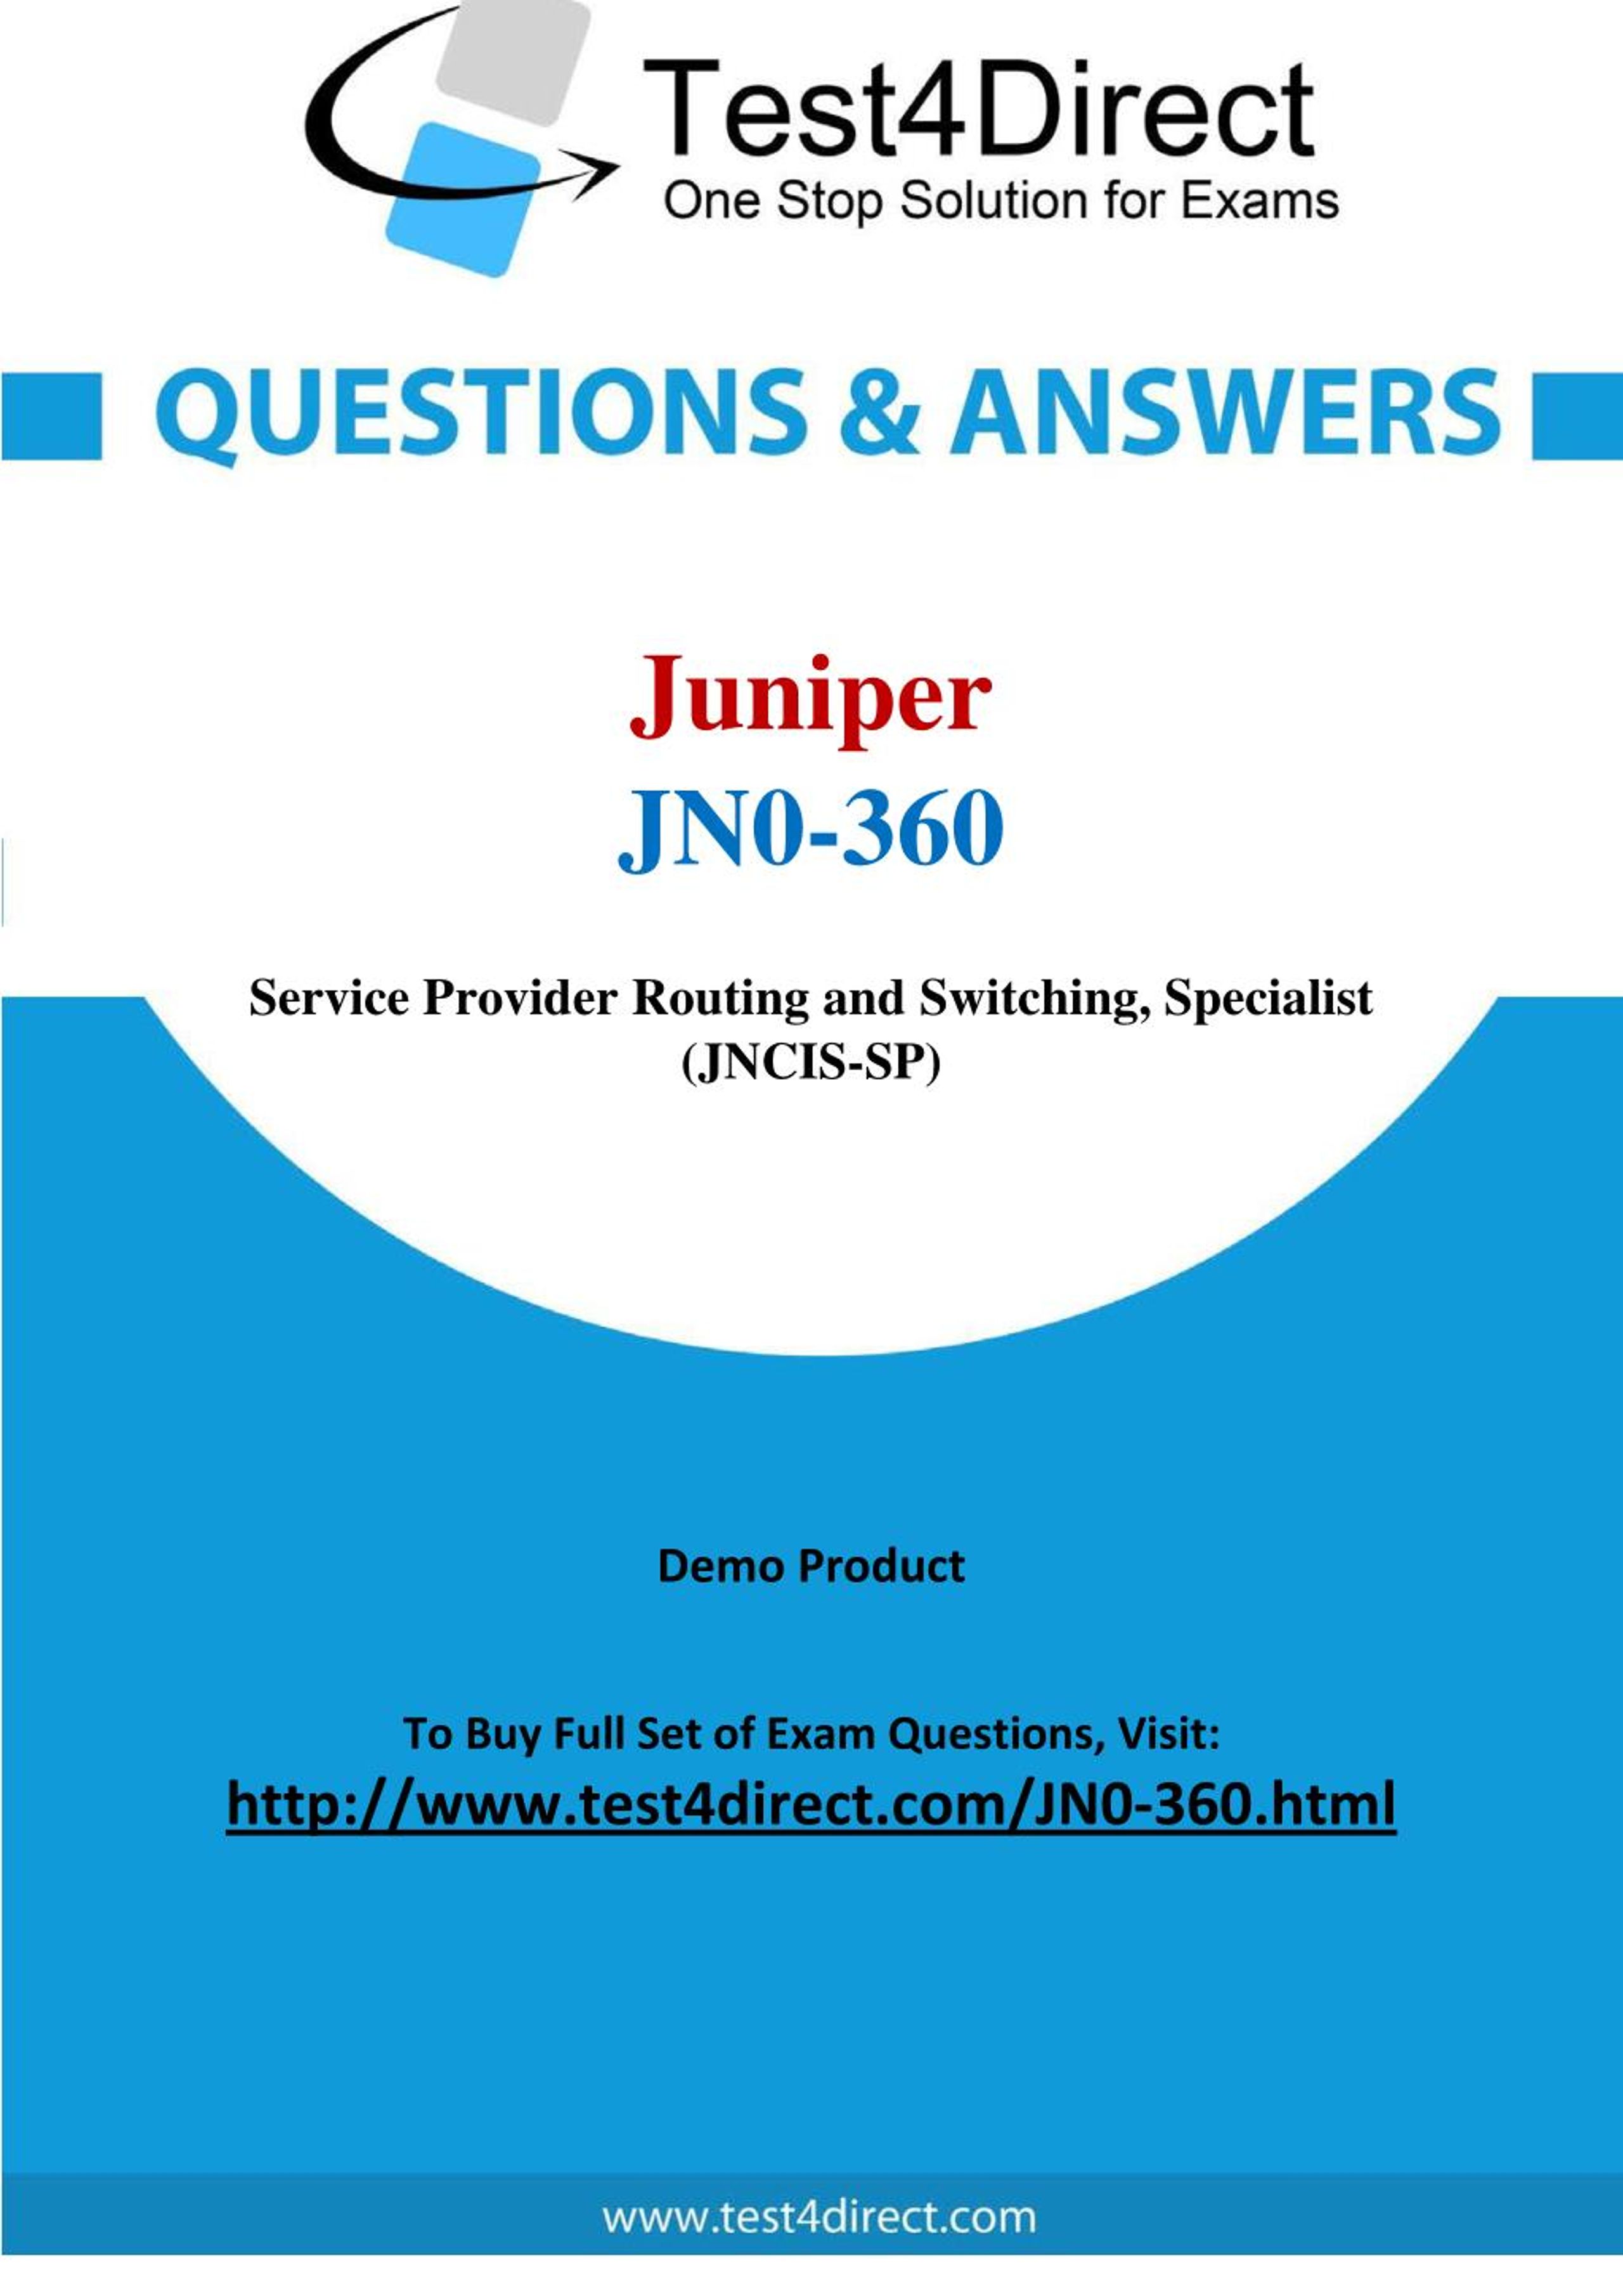 JN0-231 Online Test